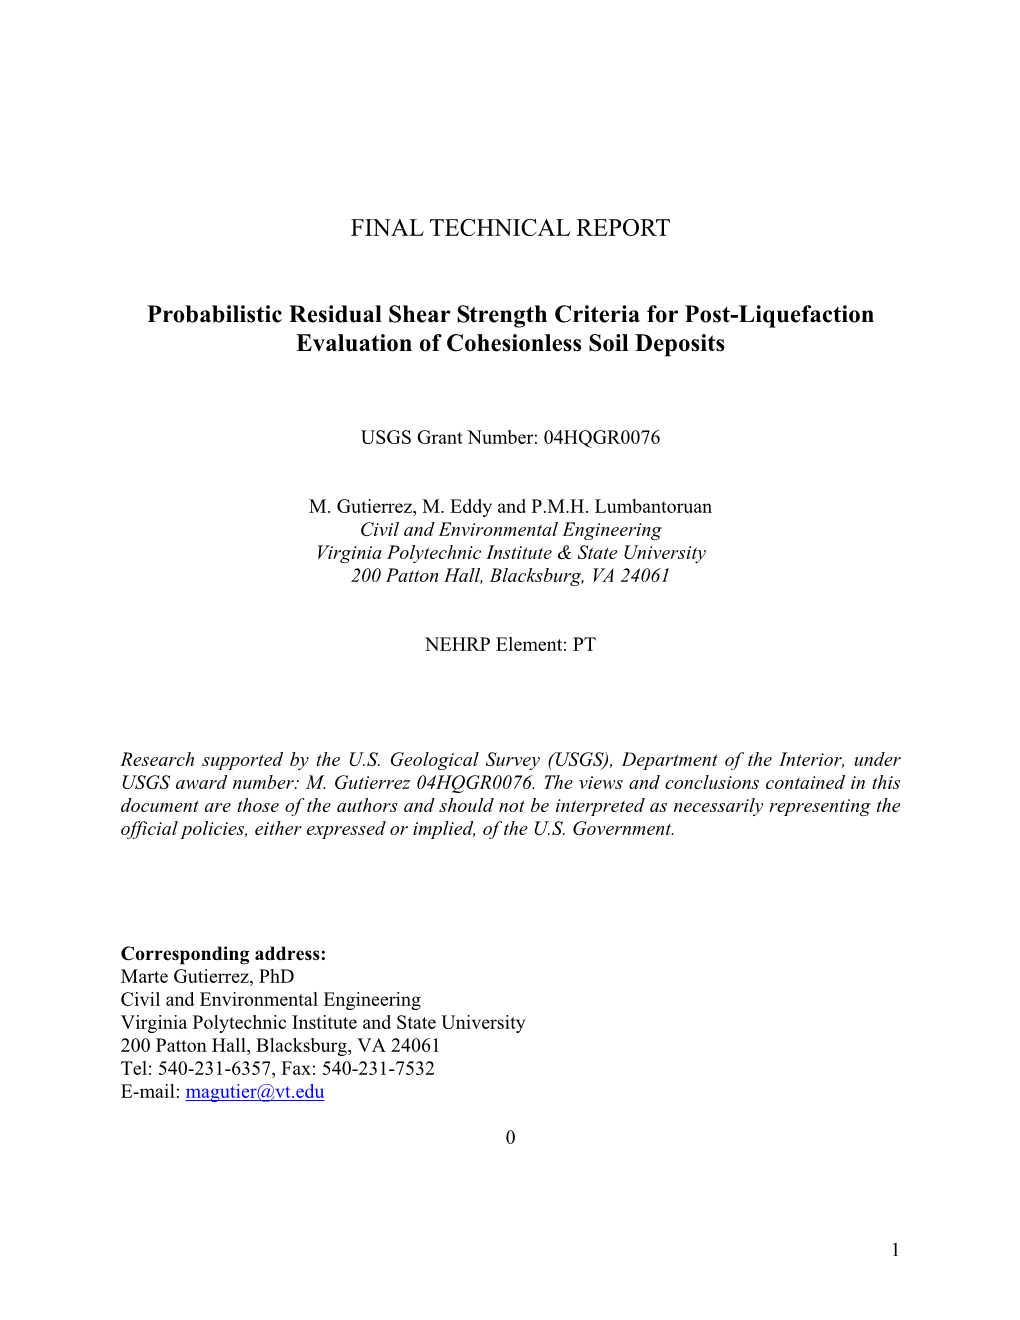 FINAL TECHNICAL REPORT Probabilistic Residual Shear